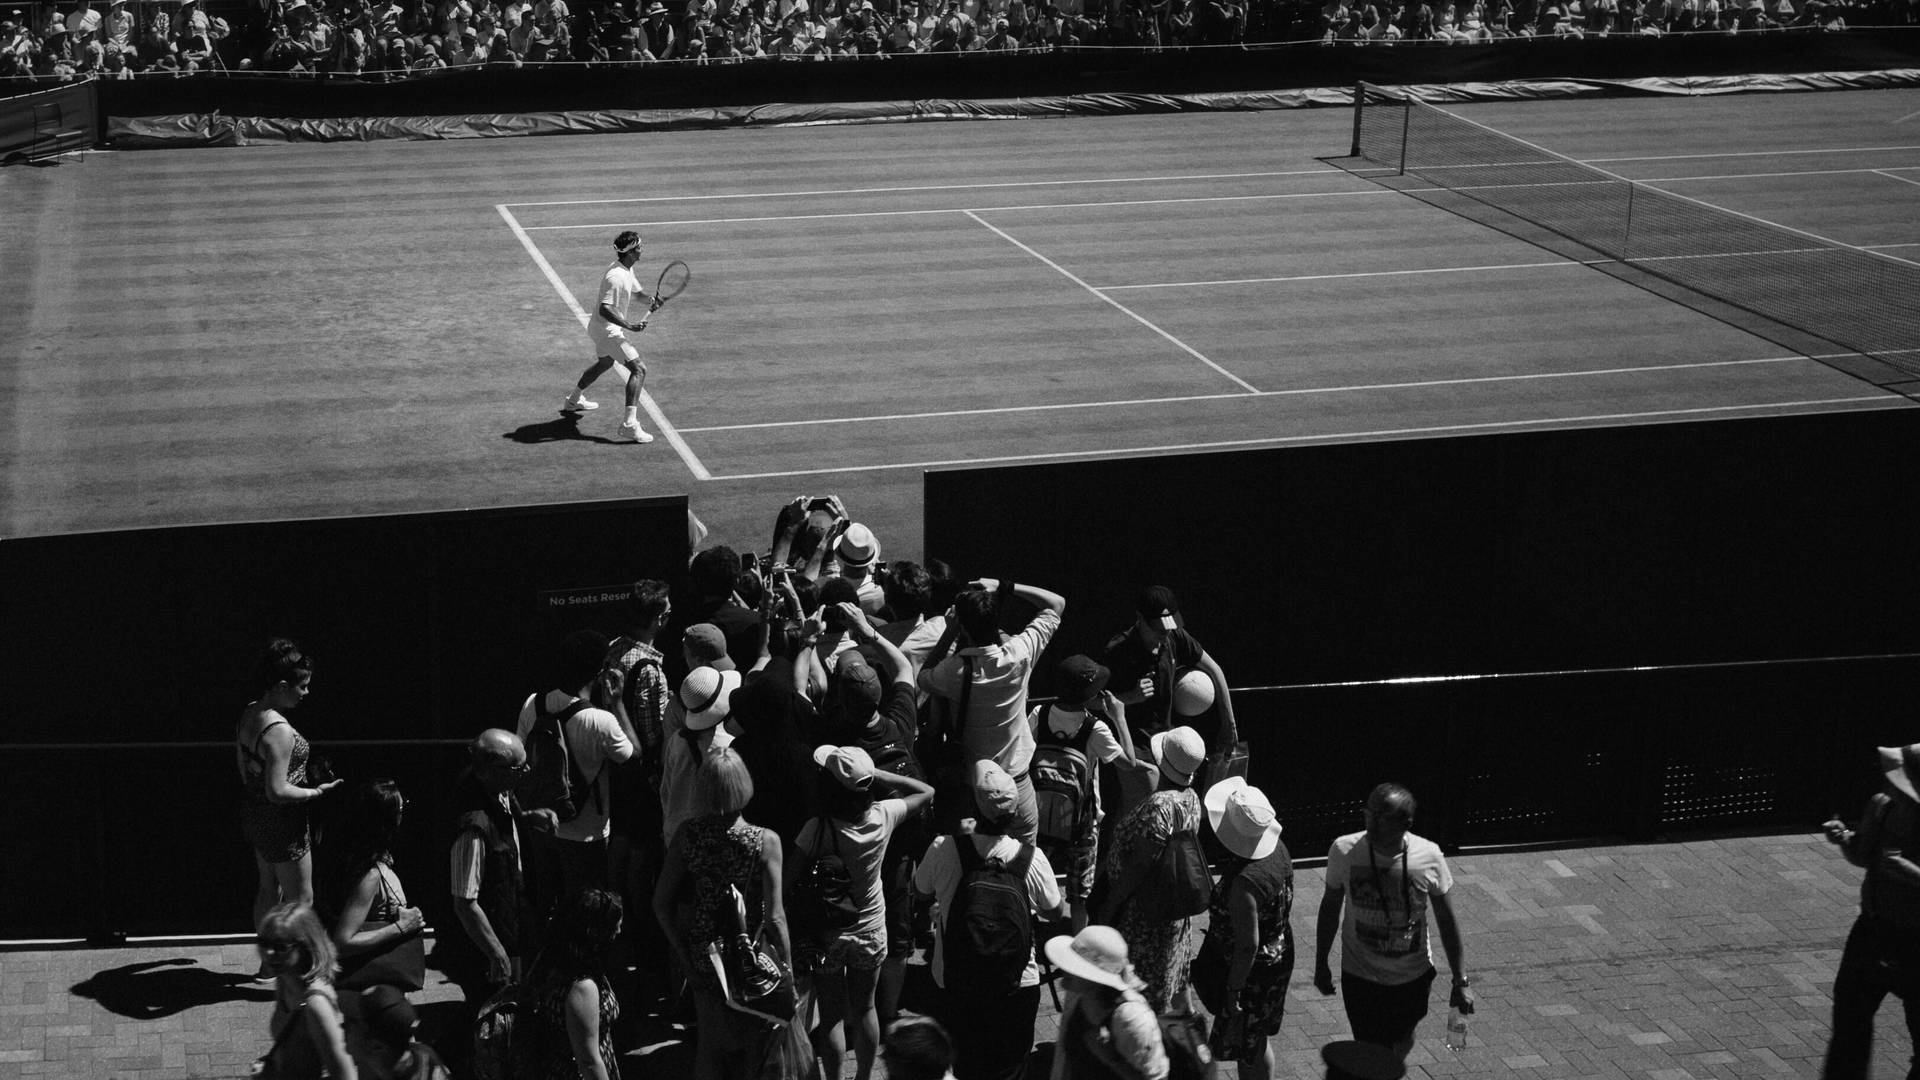 Wimbledon Tennis Player Greyscale Photograph Wallpaper